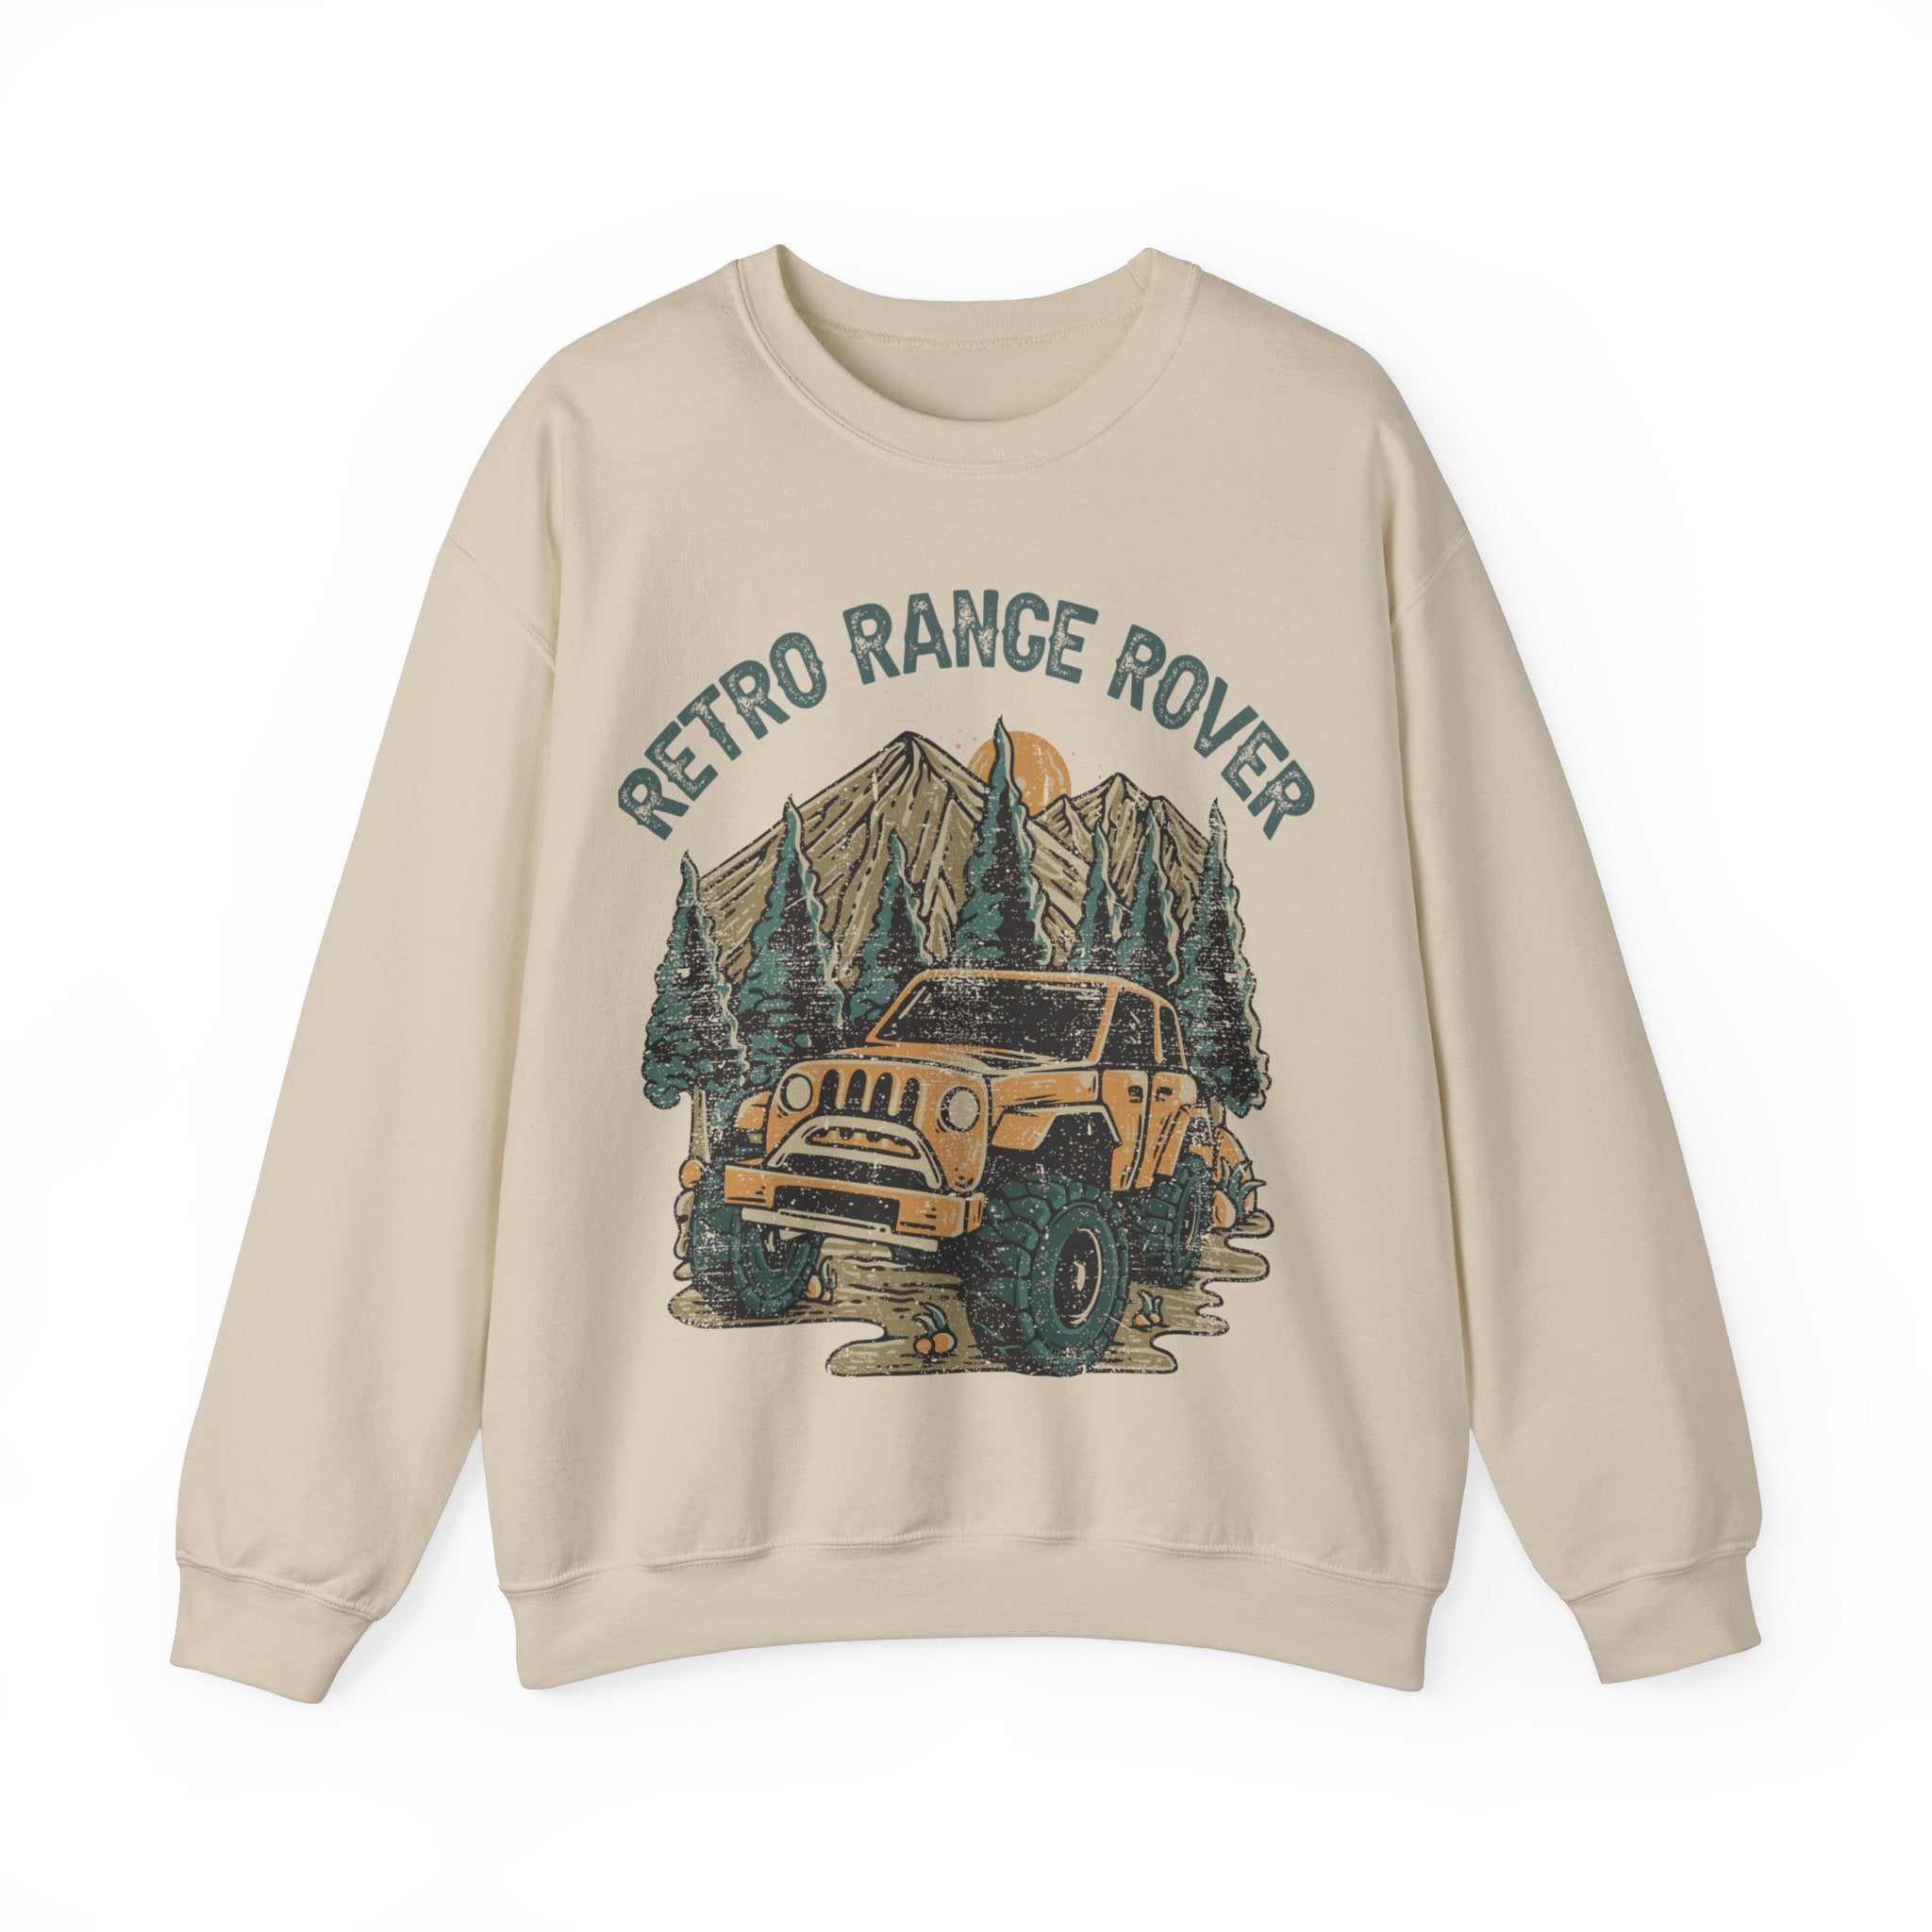 Men's "Retro Range Rover" Vintage Sweatshirt